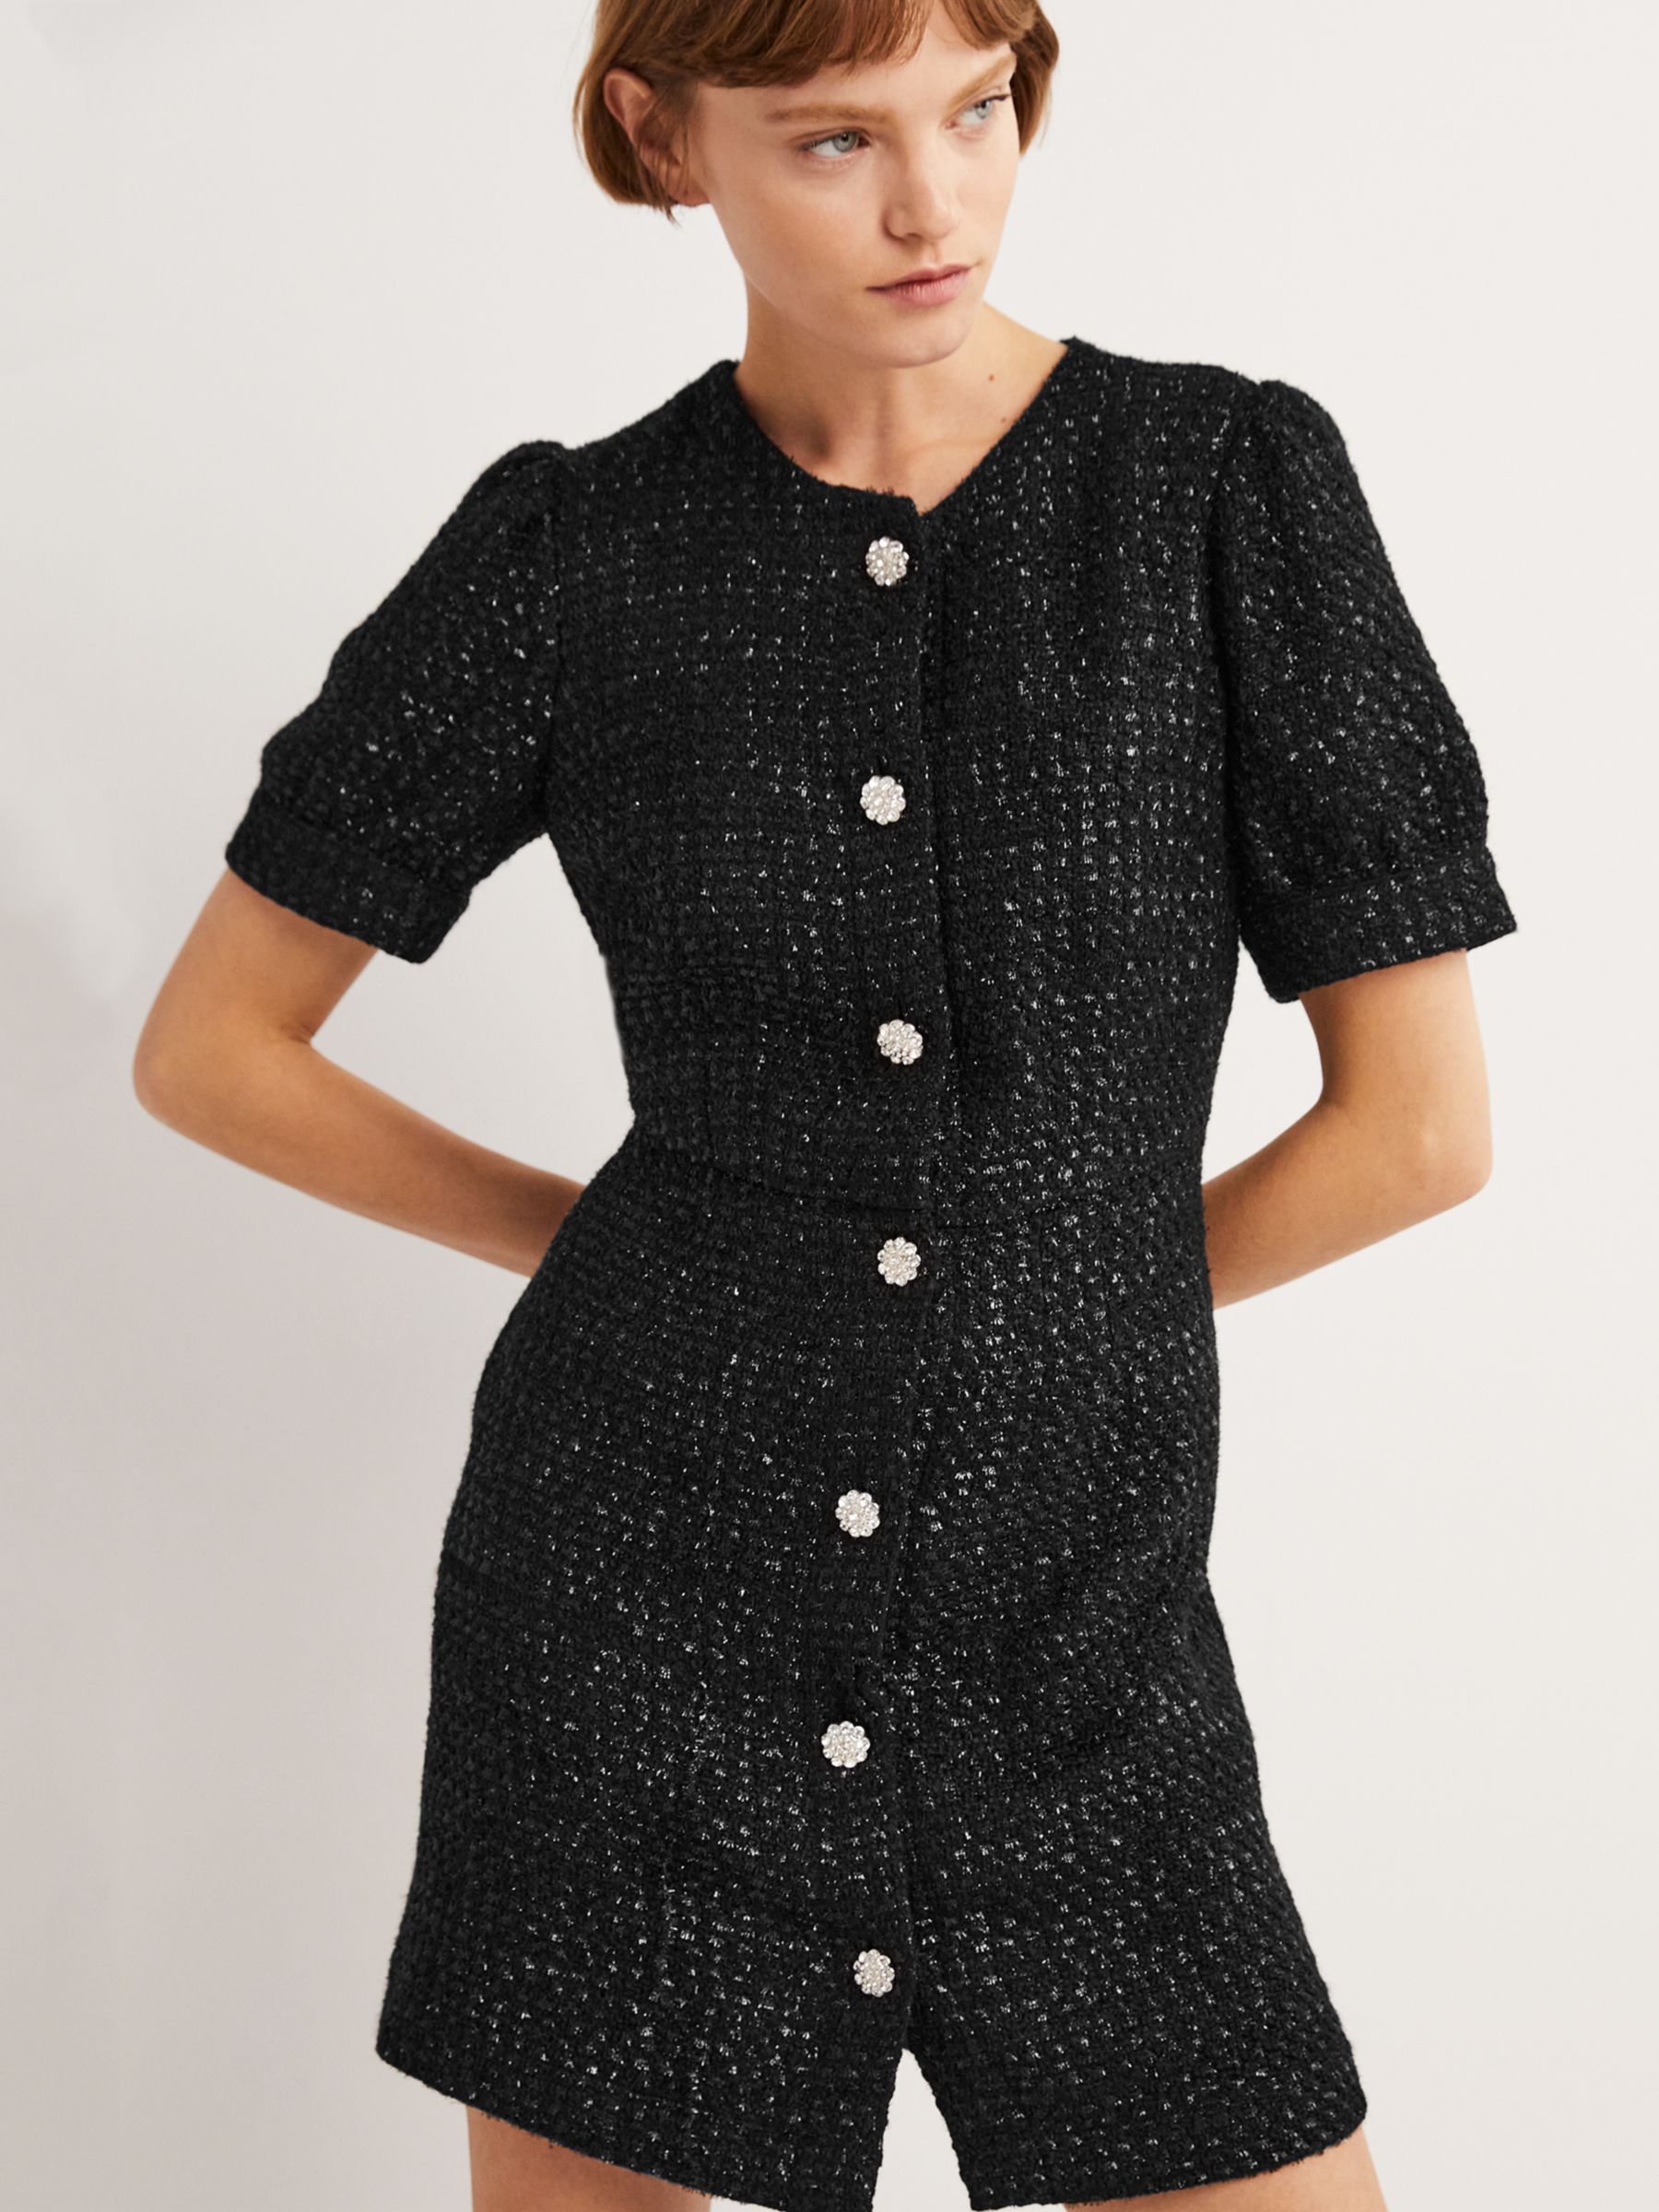 Boden Metallic Textured Mini Dress, Black at John Lewis & Partners